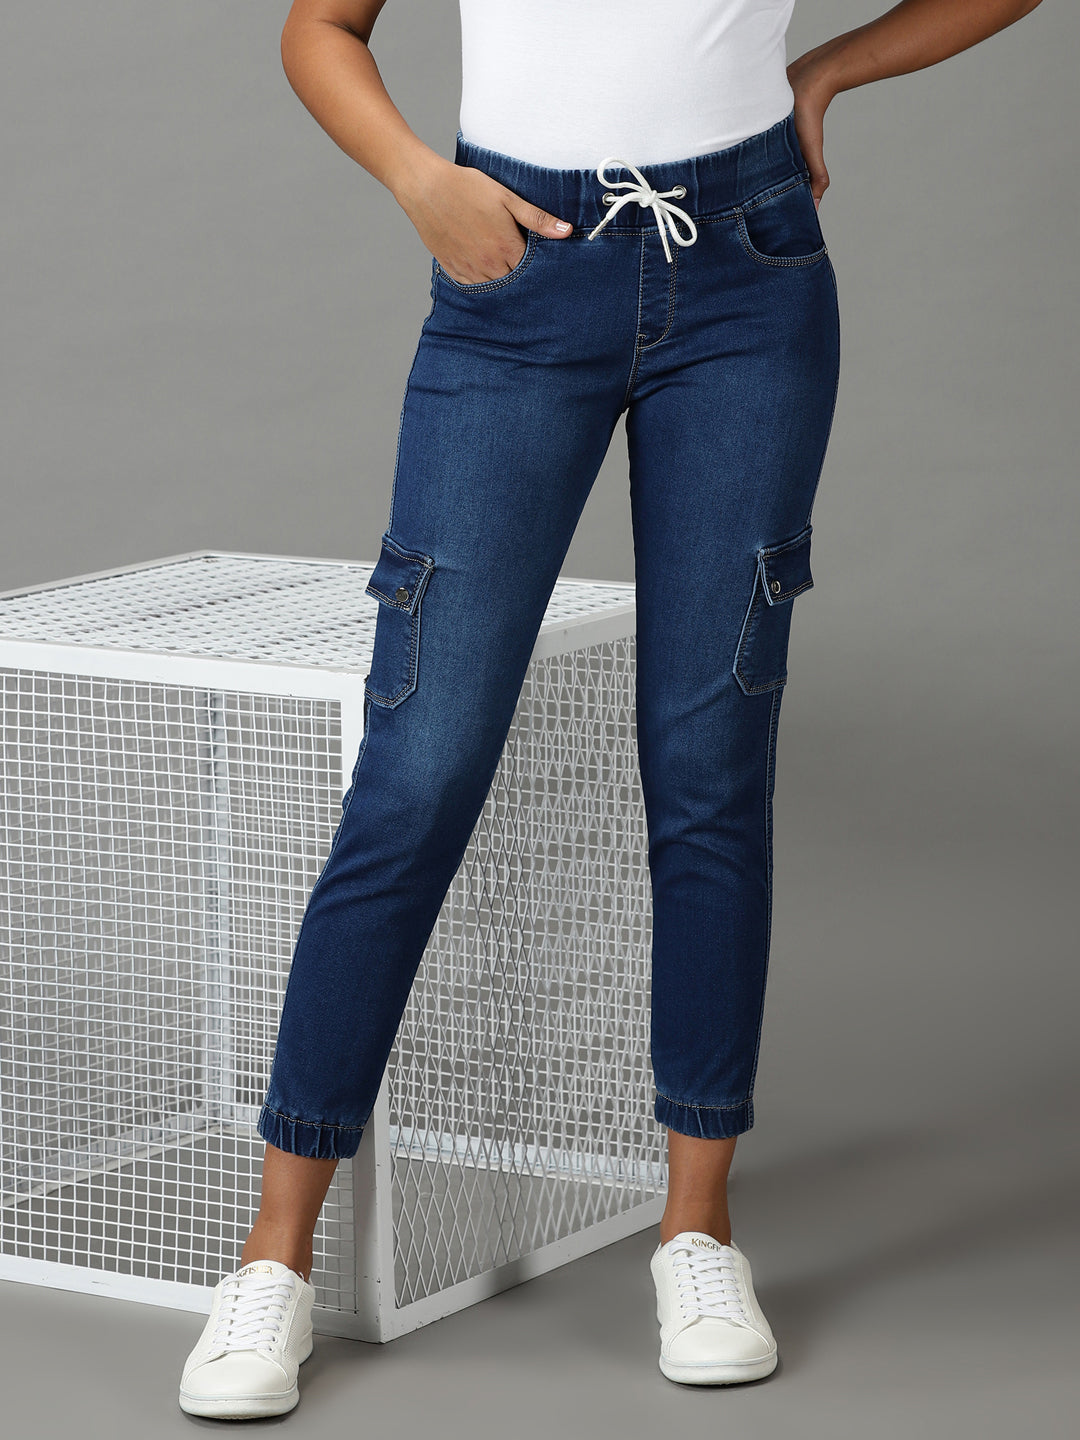 Women's Navy Blue Solid Jogger Denim Jeans